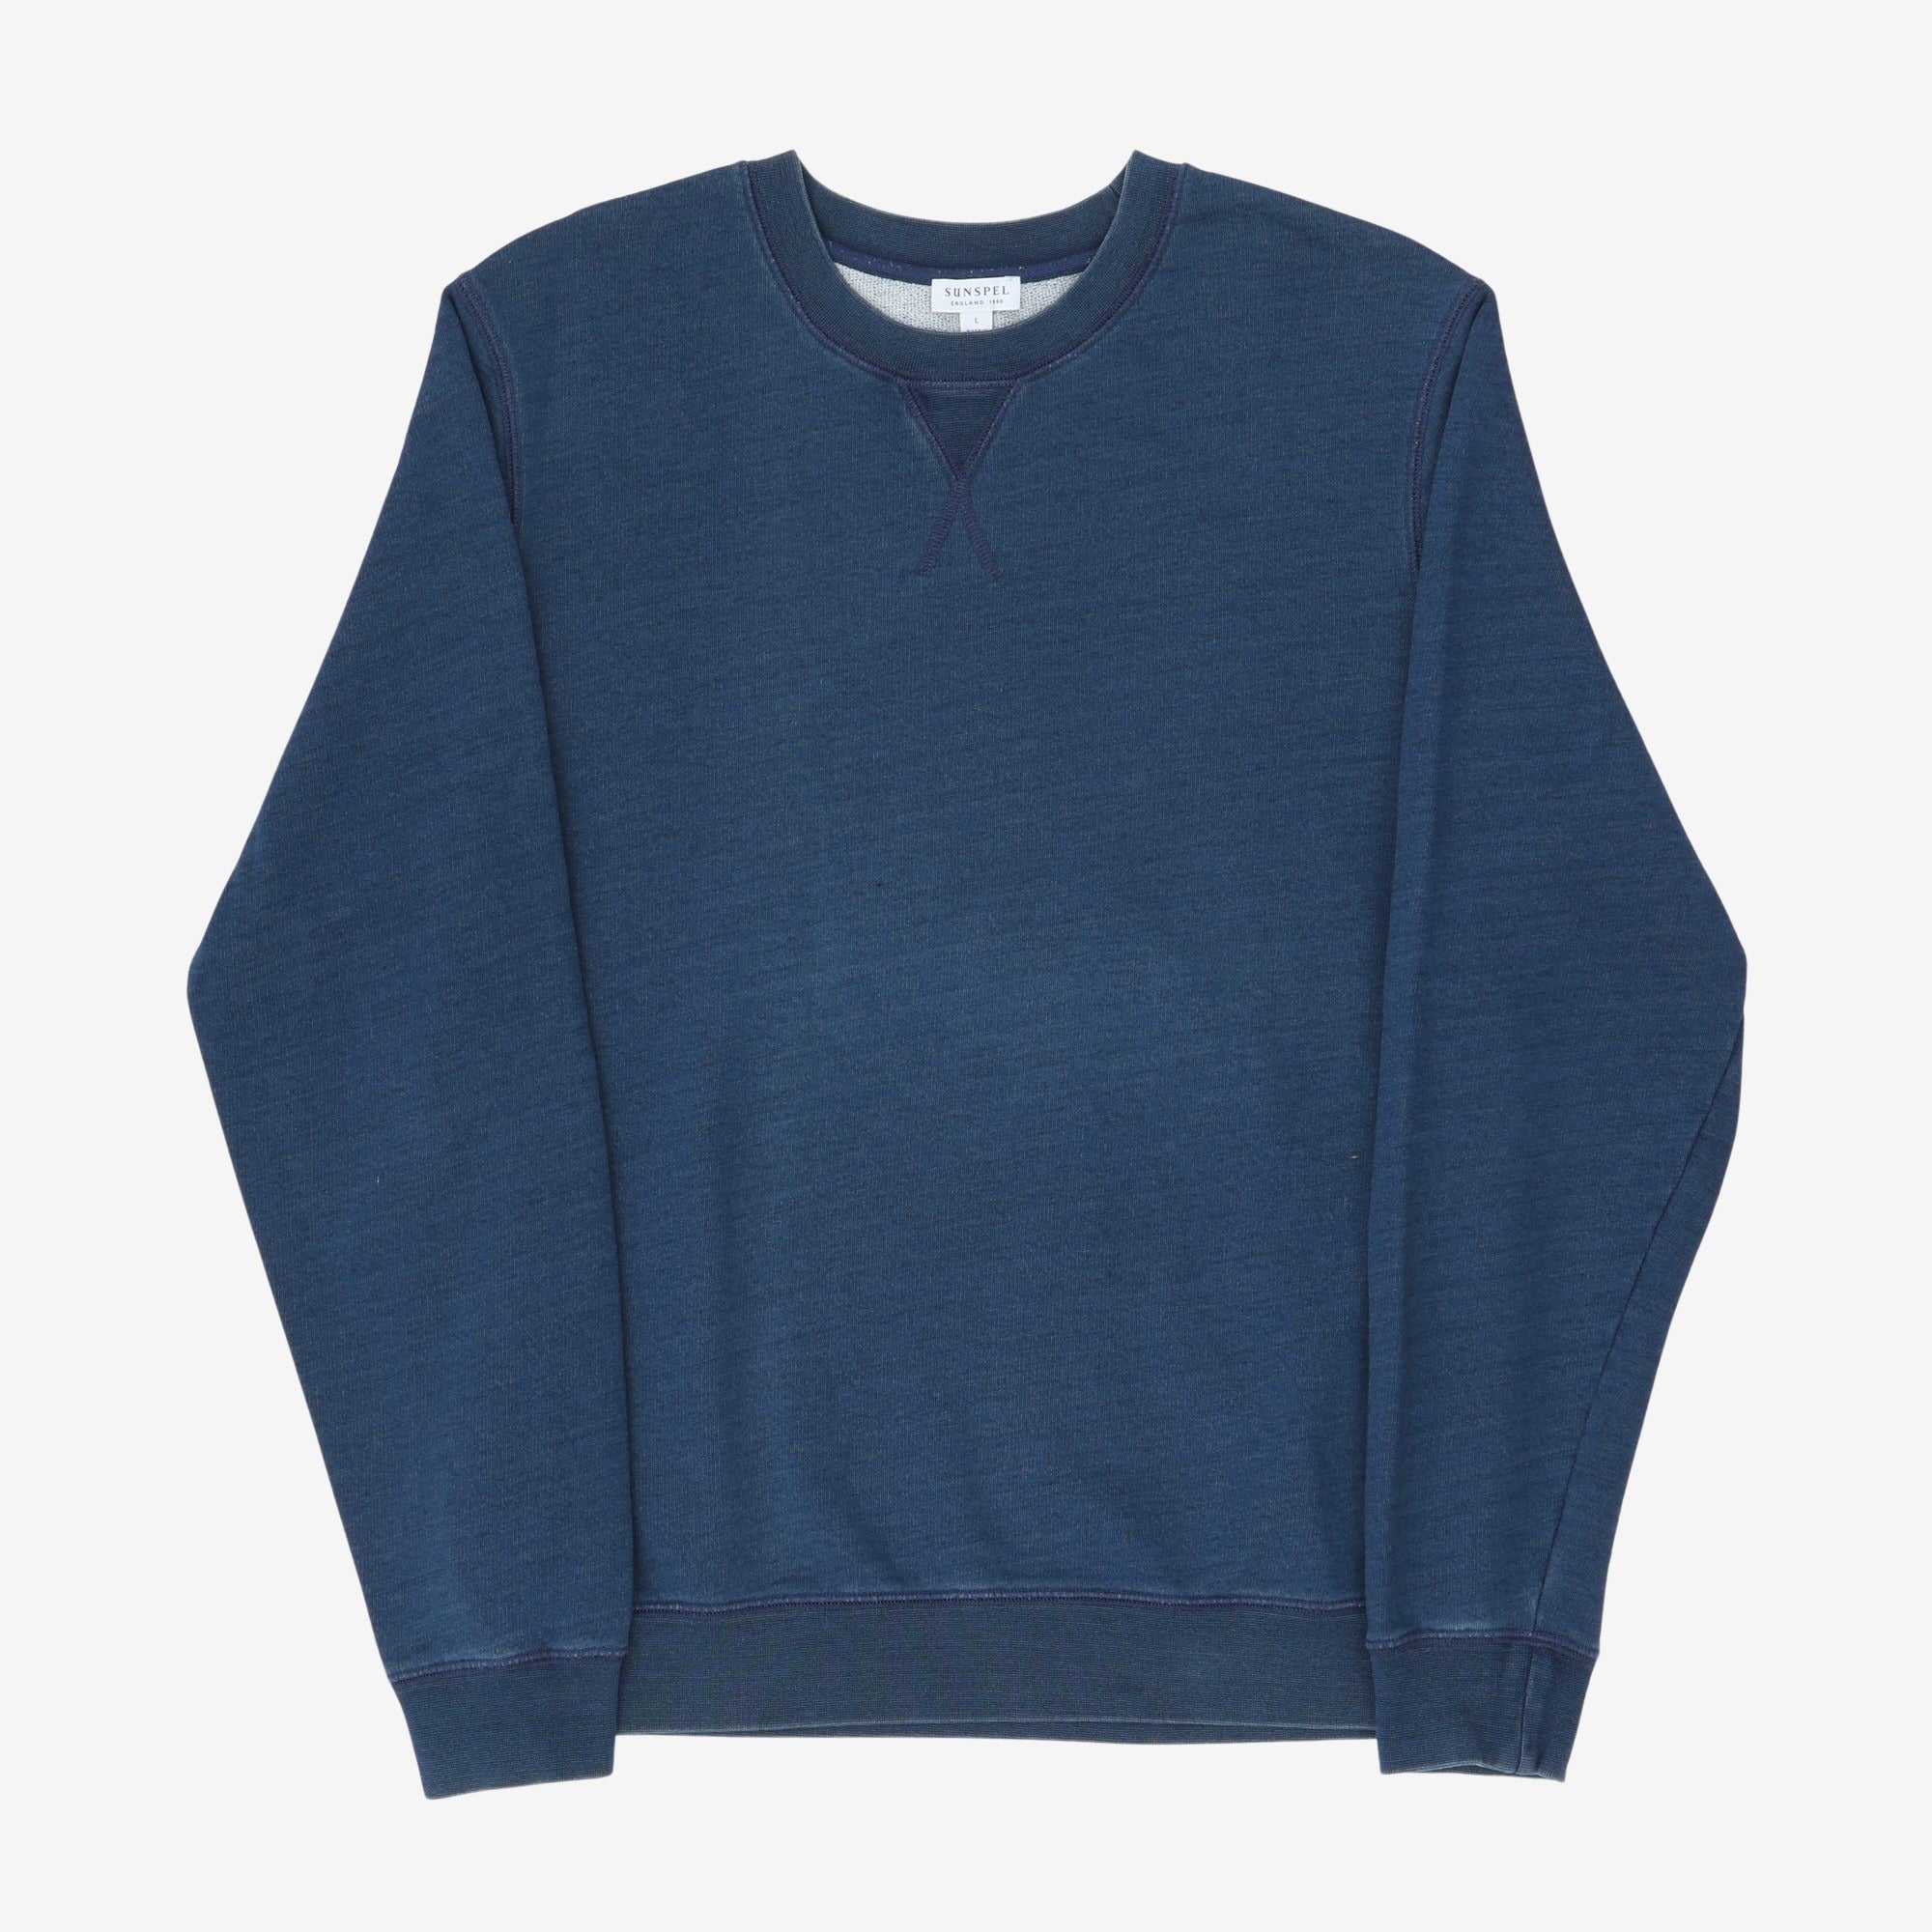 Indigo Dyed Sweatshirt